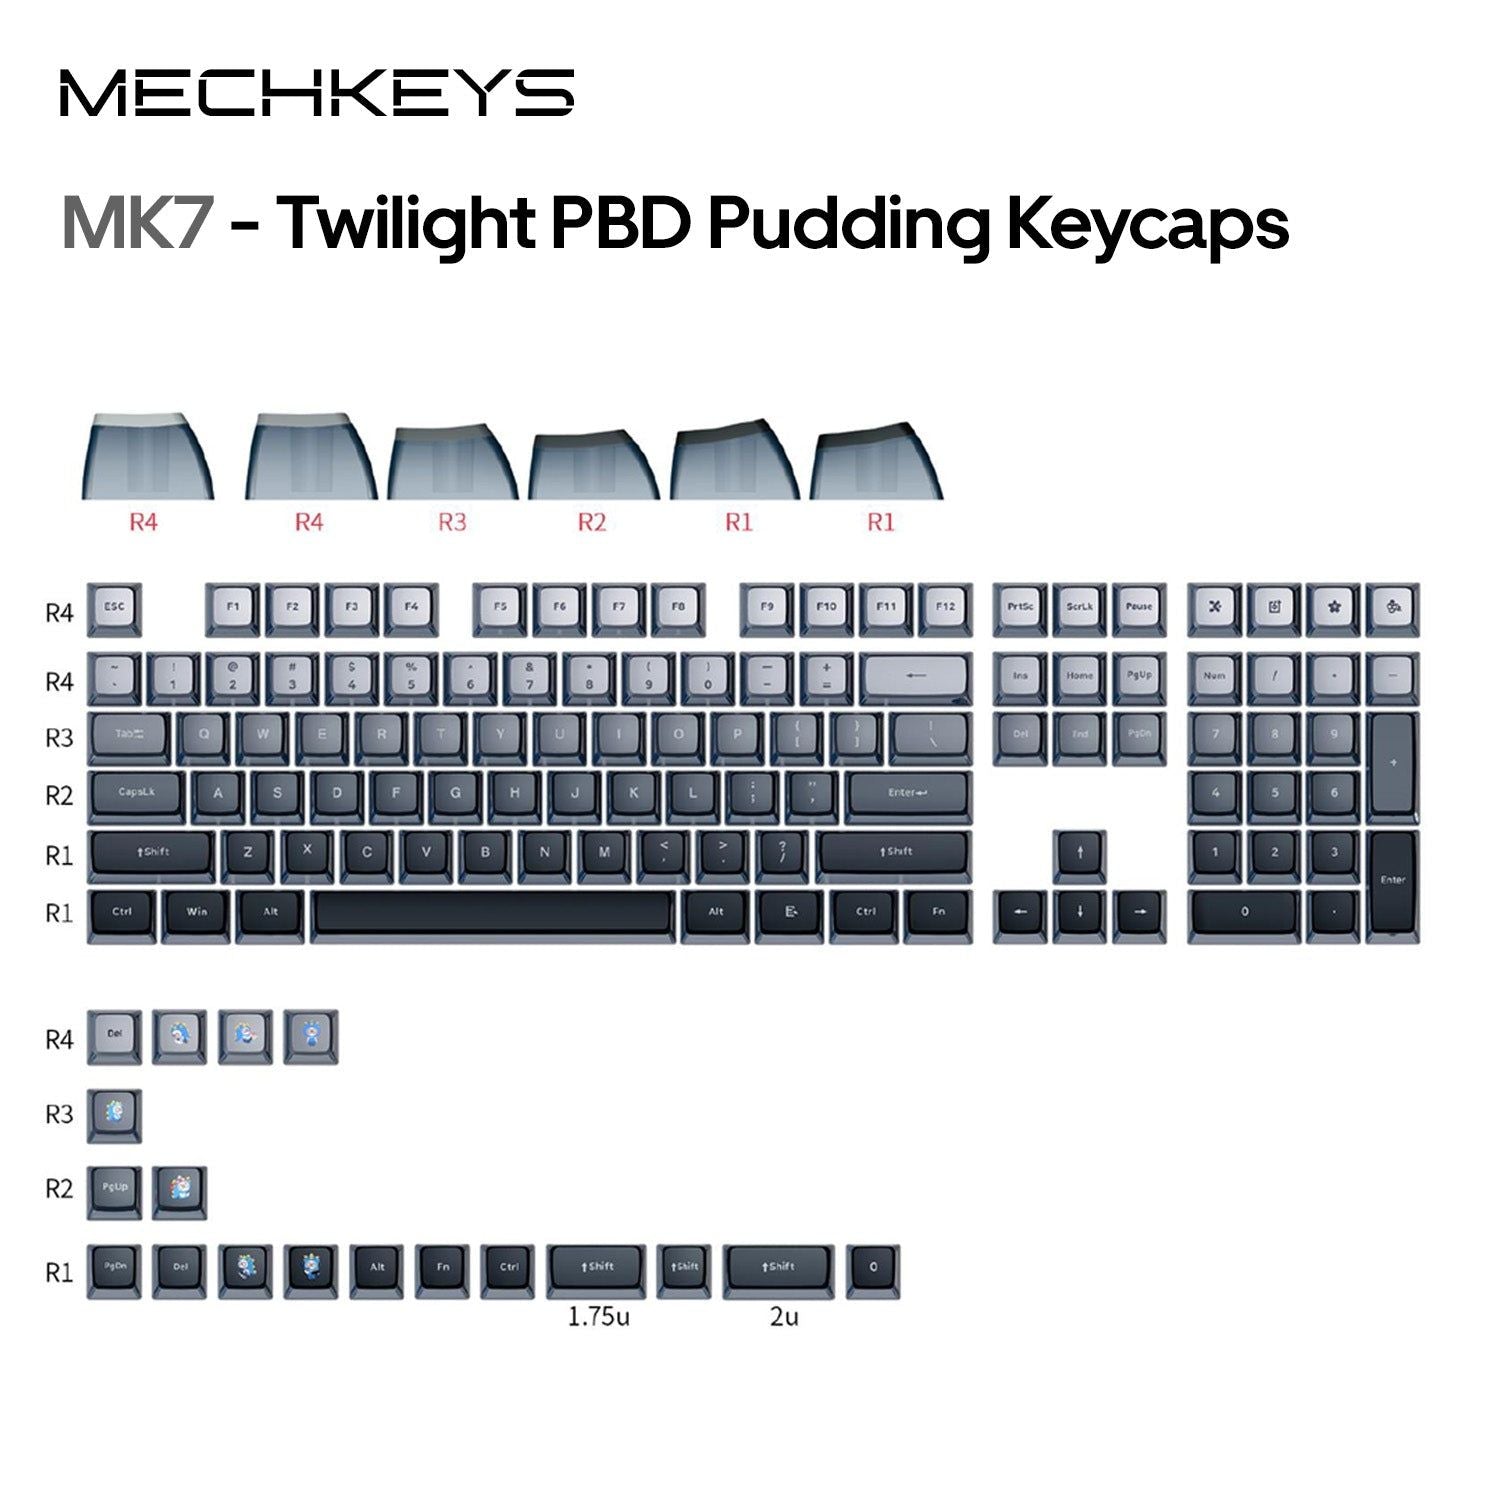 OVERCLOCK MECHKEYS Twilight PBT Pudding Keycaps - OVERCLOCK Computer